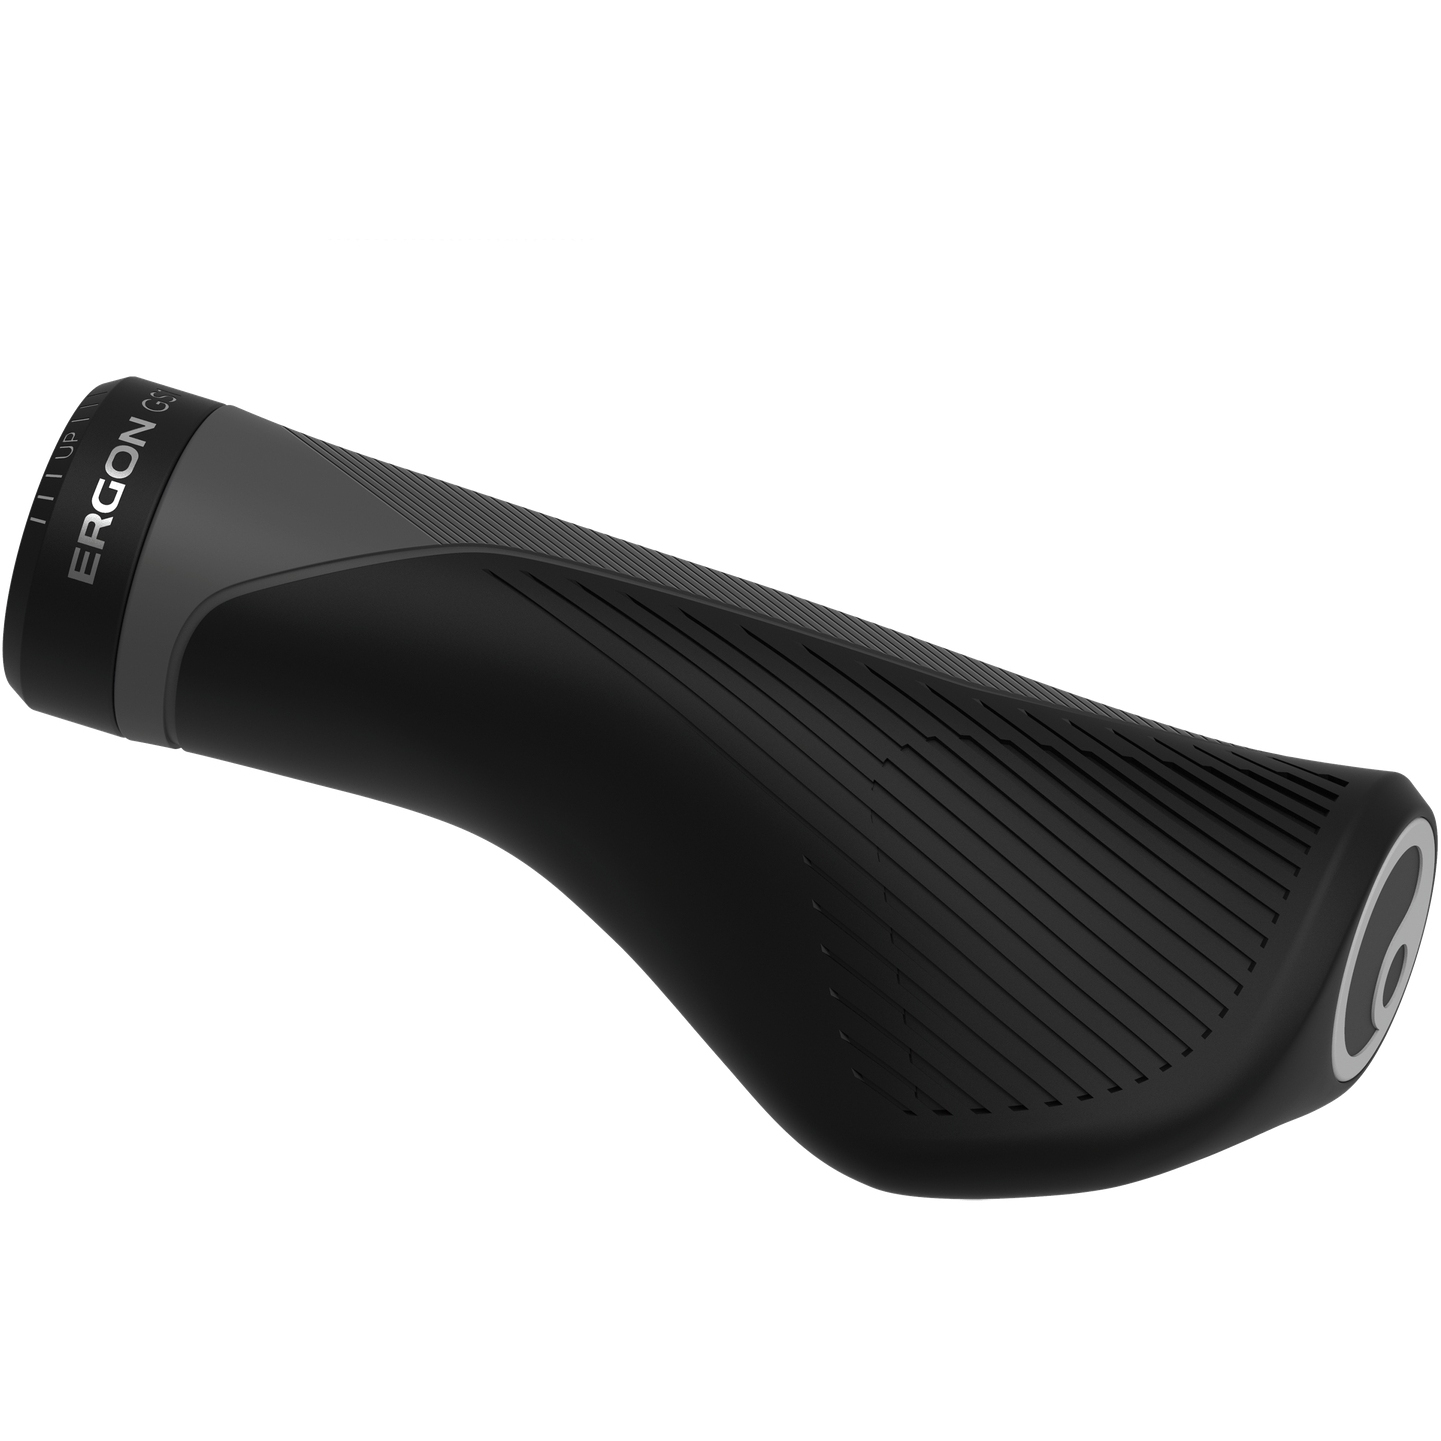 Productfoto van Ergon GS1 Evo Large Bar Grips - black